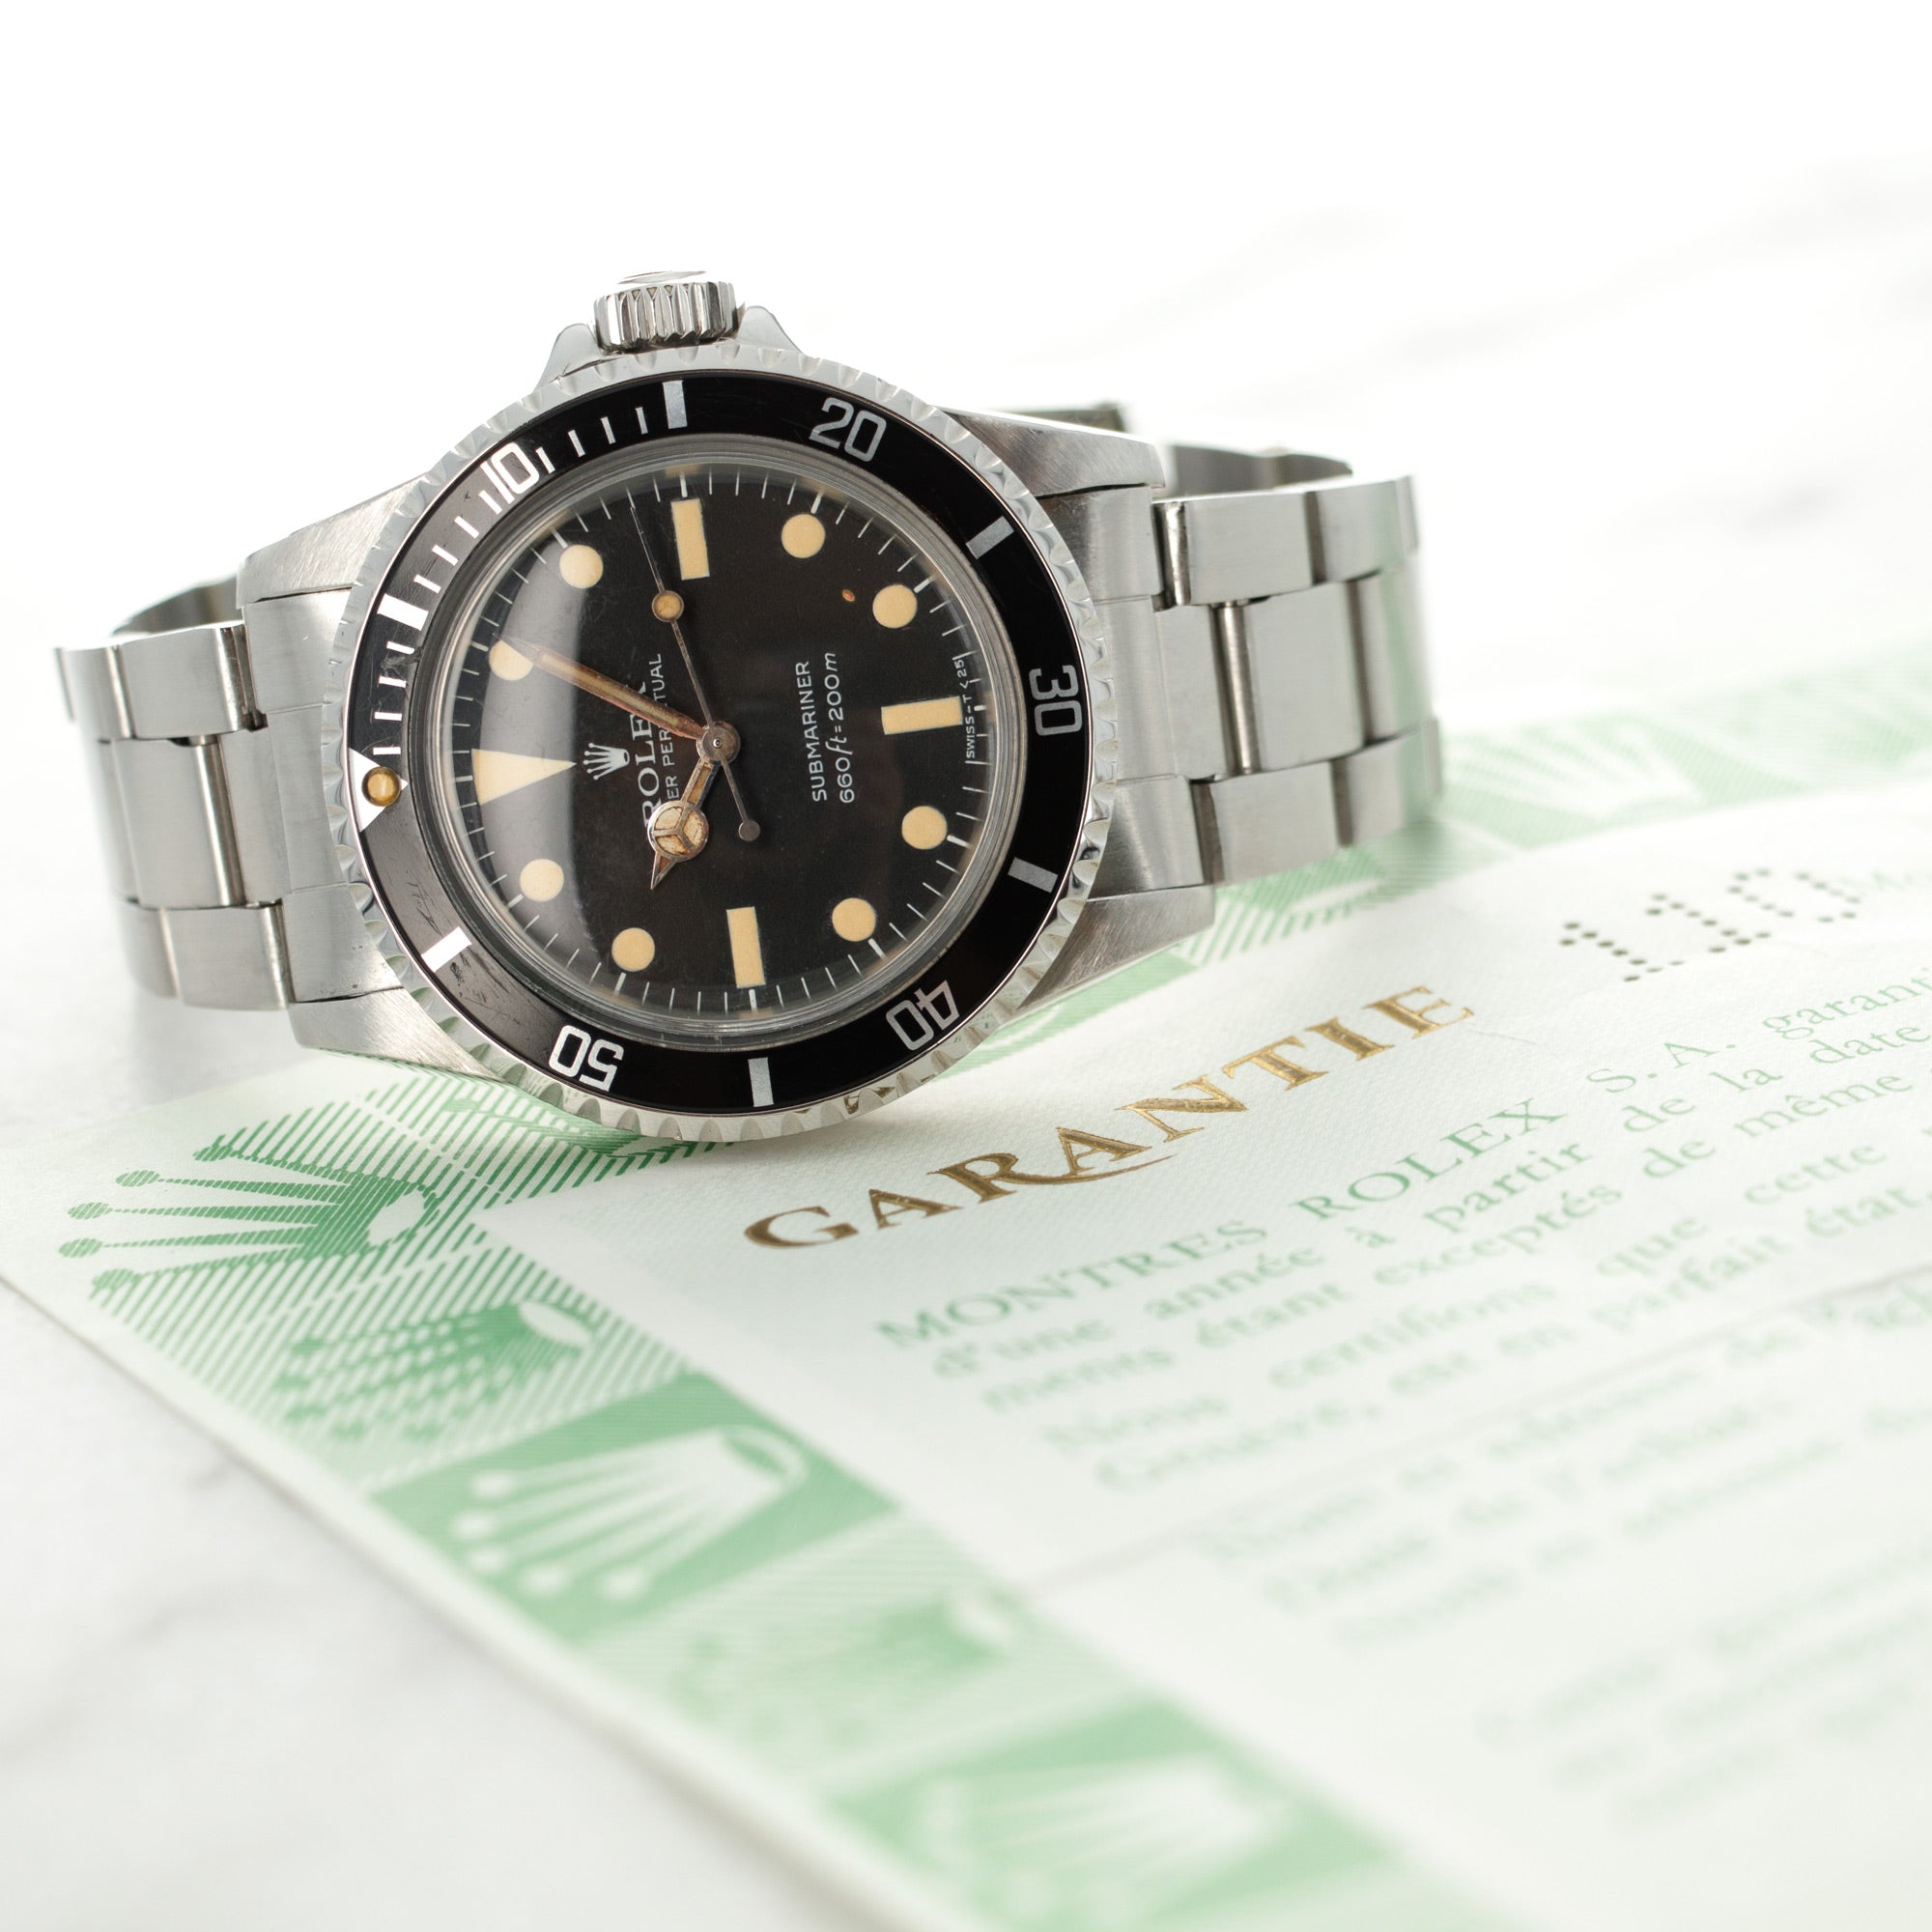 Rolex - Rolex Steel Maxi Dial Submariner Ref. 5513 with Original Warranty - The Keystone Watches